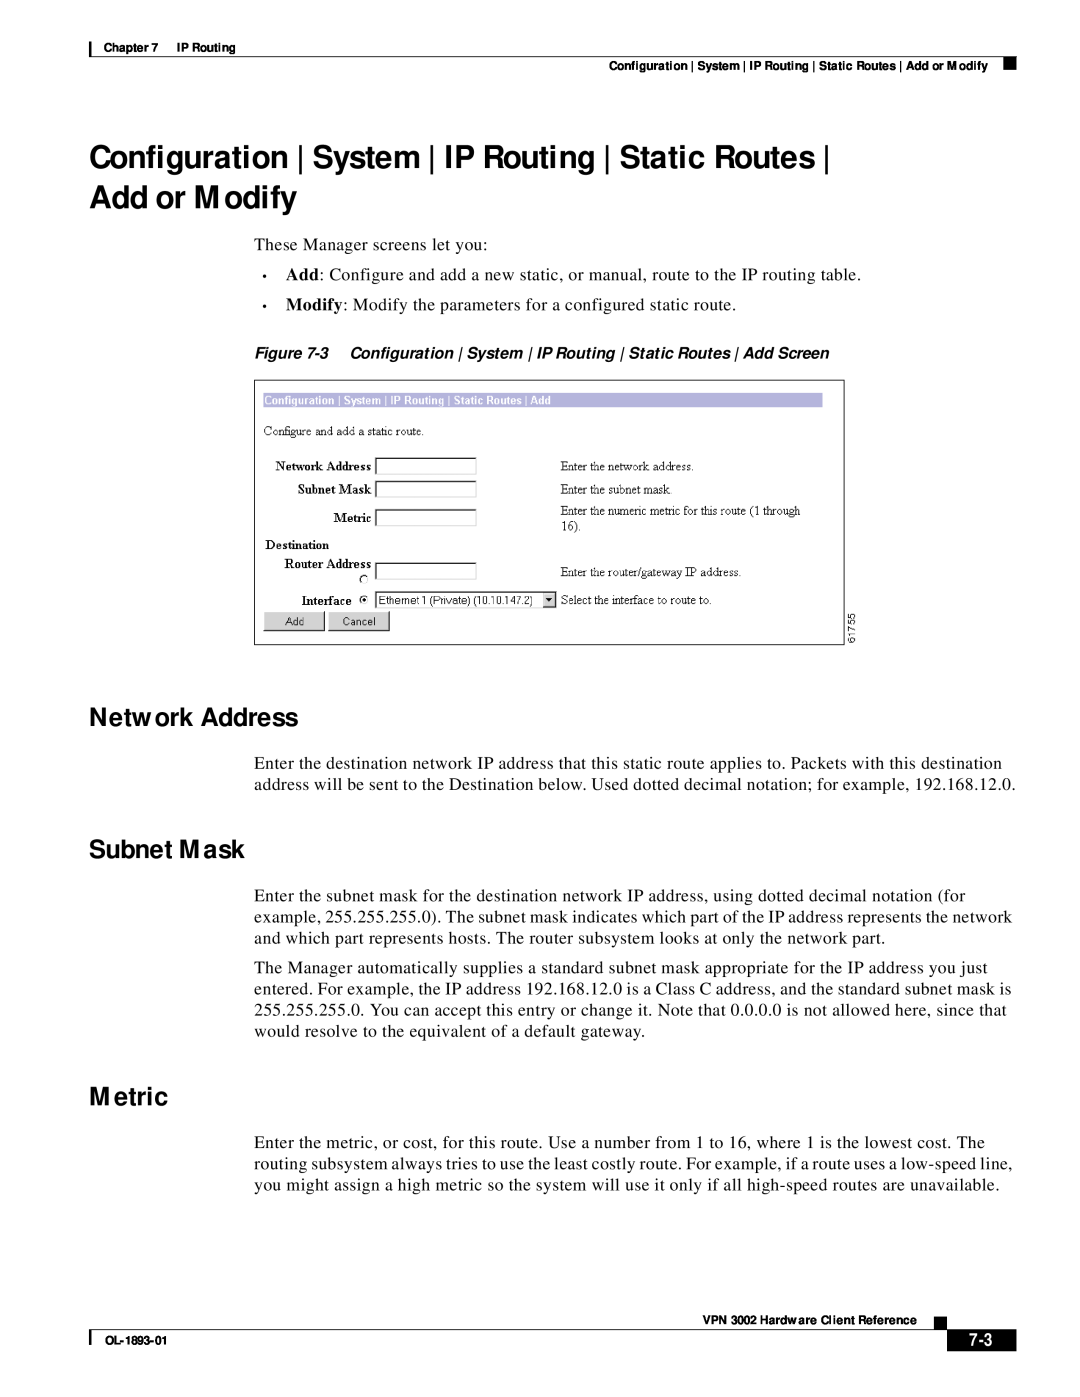 Cisco Systems VPN 3002 manual Network Address, Metric, Subnet Mask 